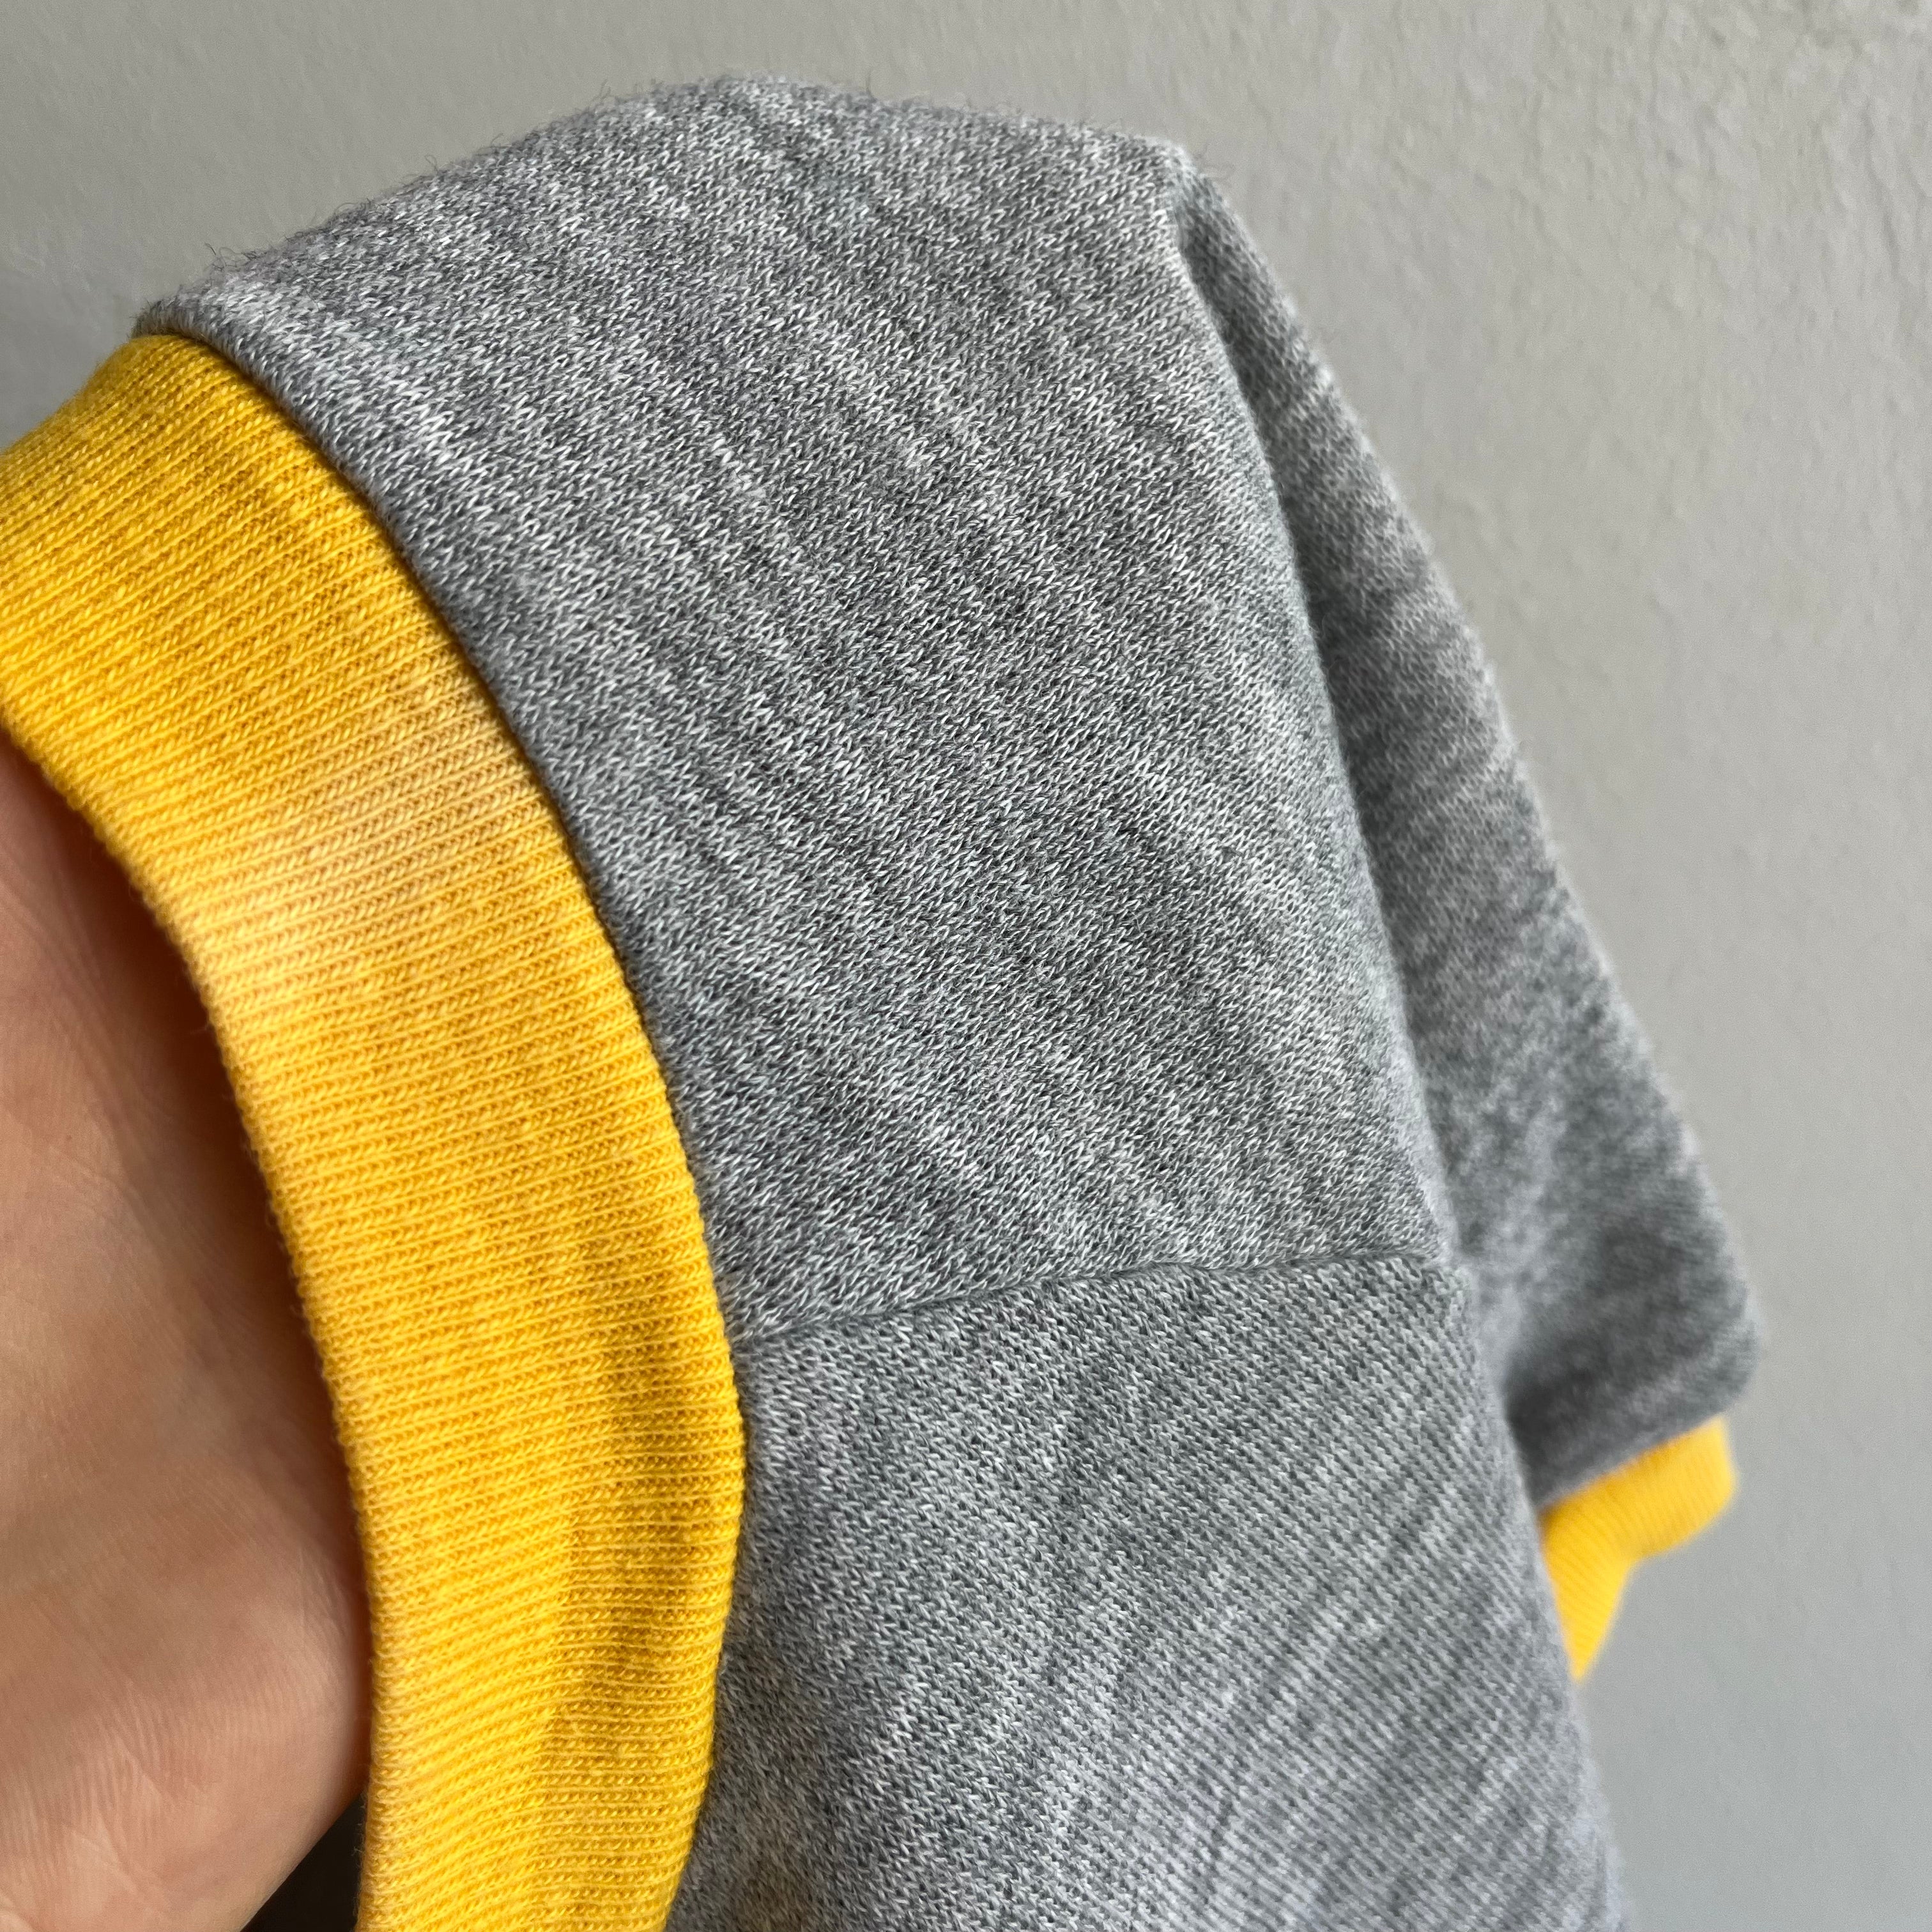 1980s Color Block Warm Up Sweatshirt - Smaller SIze